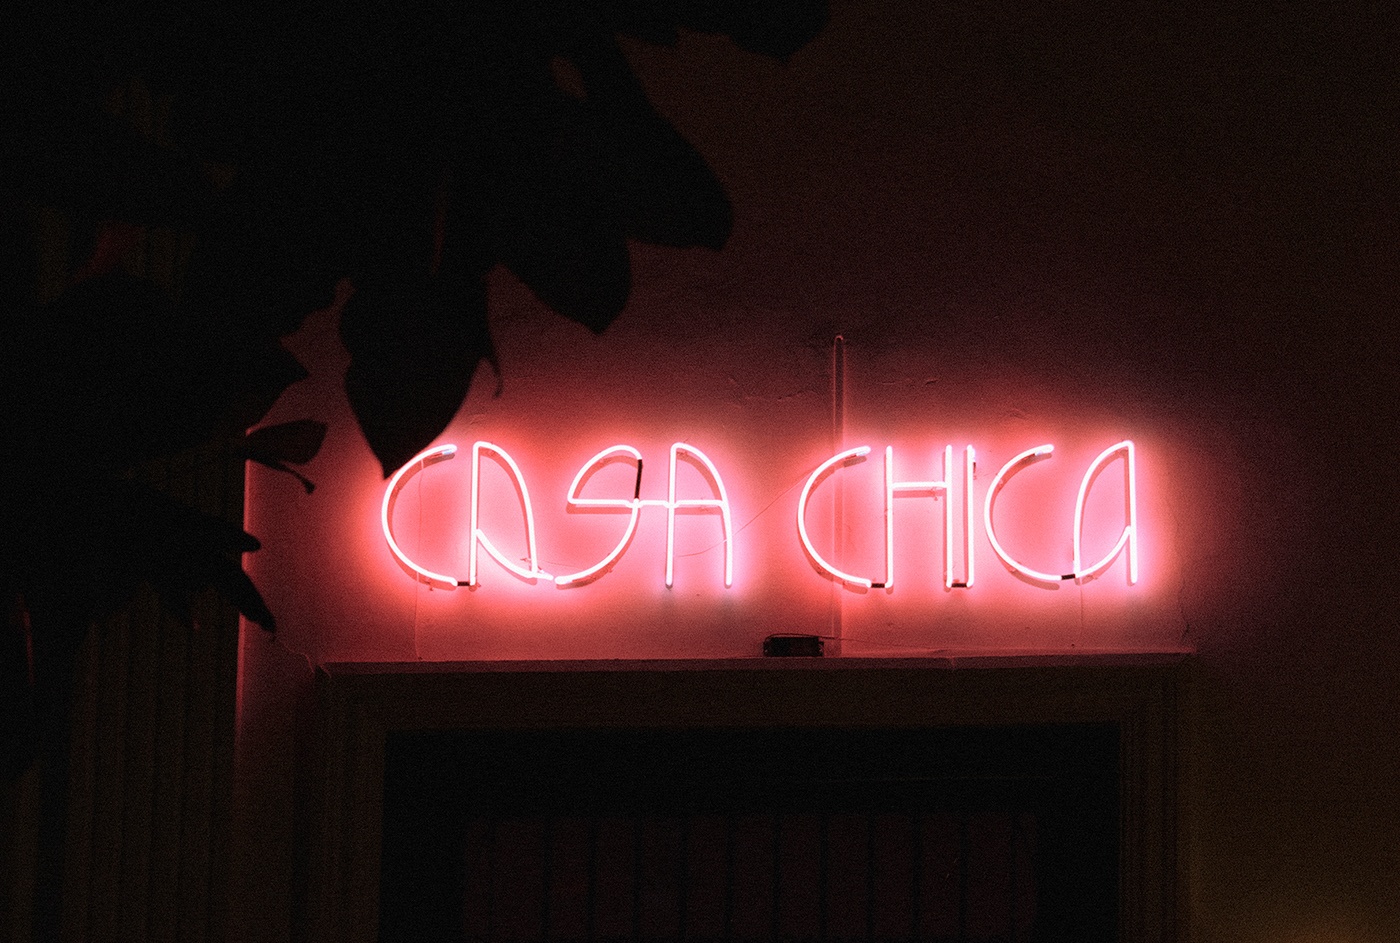 Casa Chica酒吧VI品牌设计